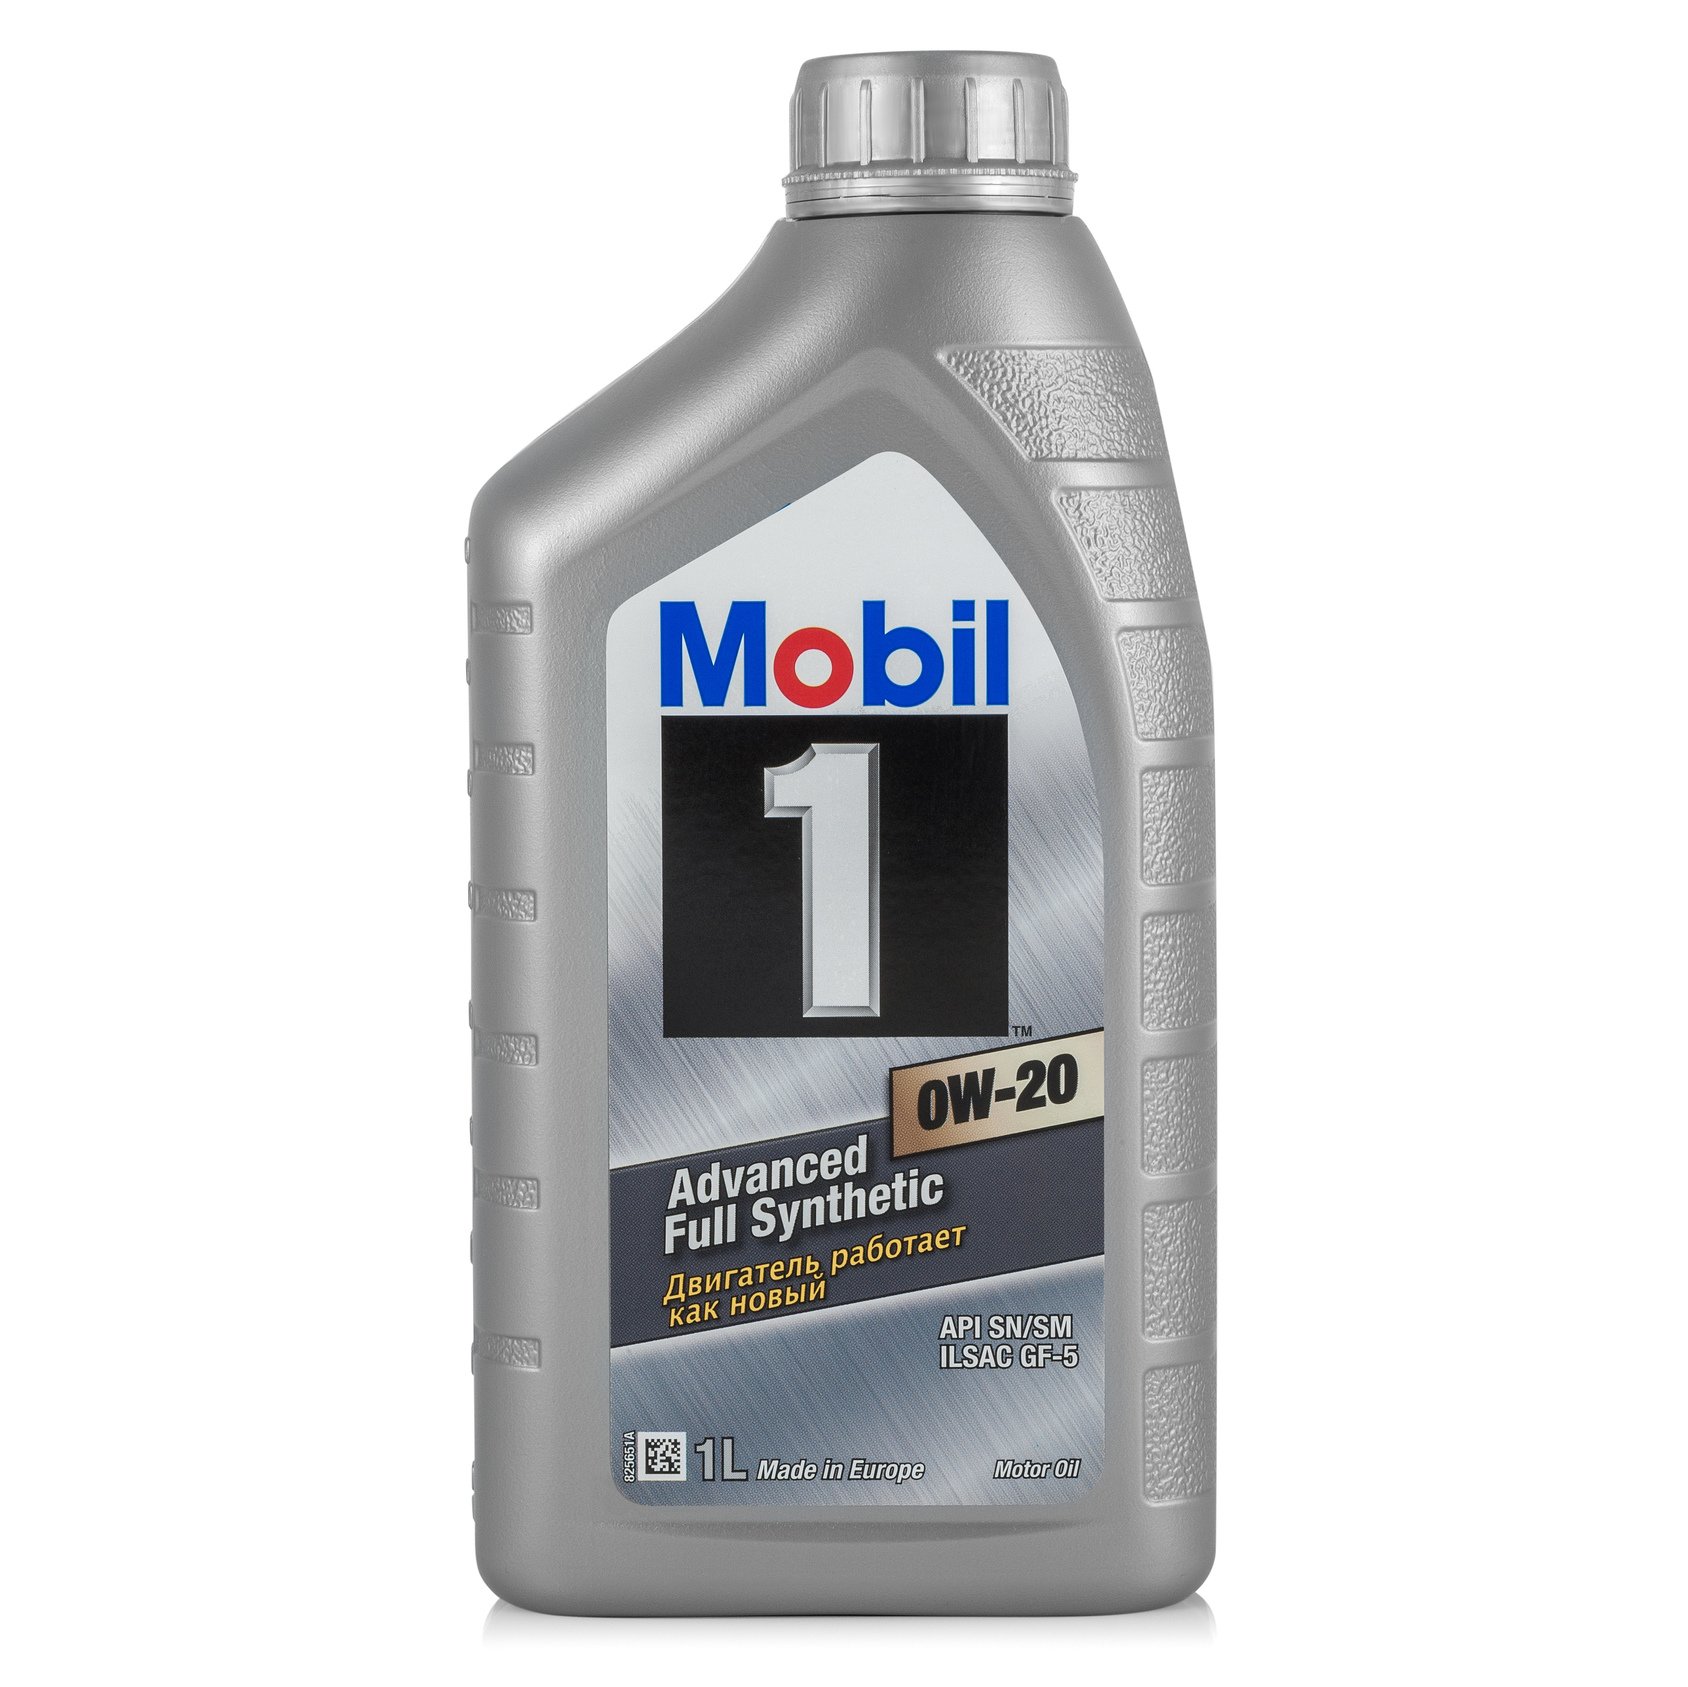 Mobil MOBIL 1 0W-20 1L Engine oil Mobil 1 Fuel Economy 0W-20, 1L MOBIL10W201L